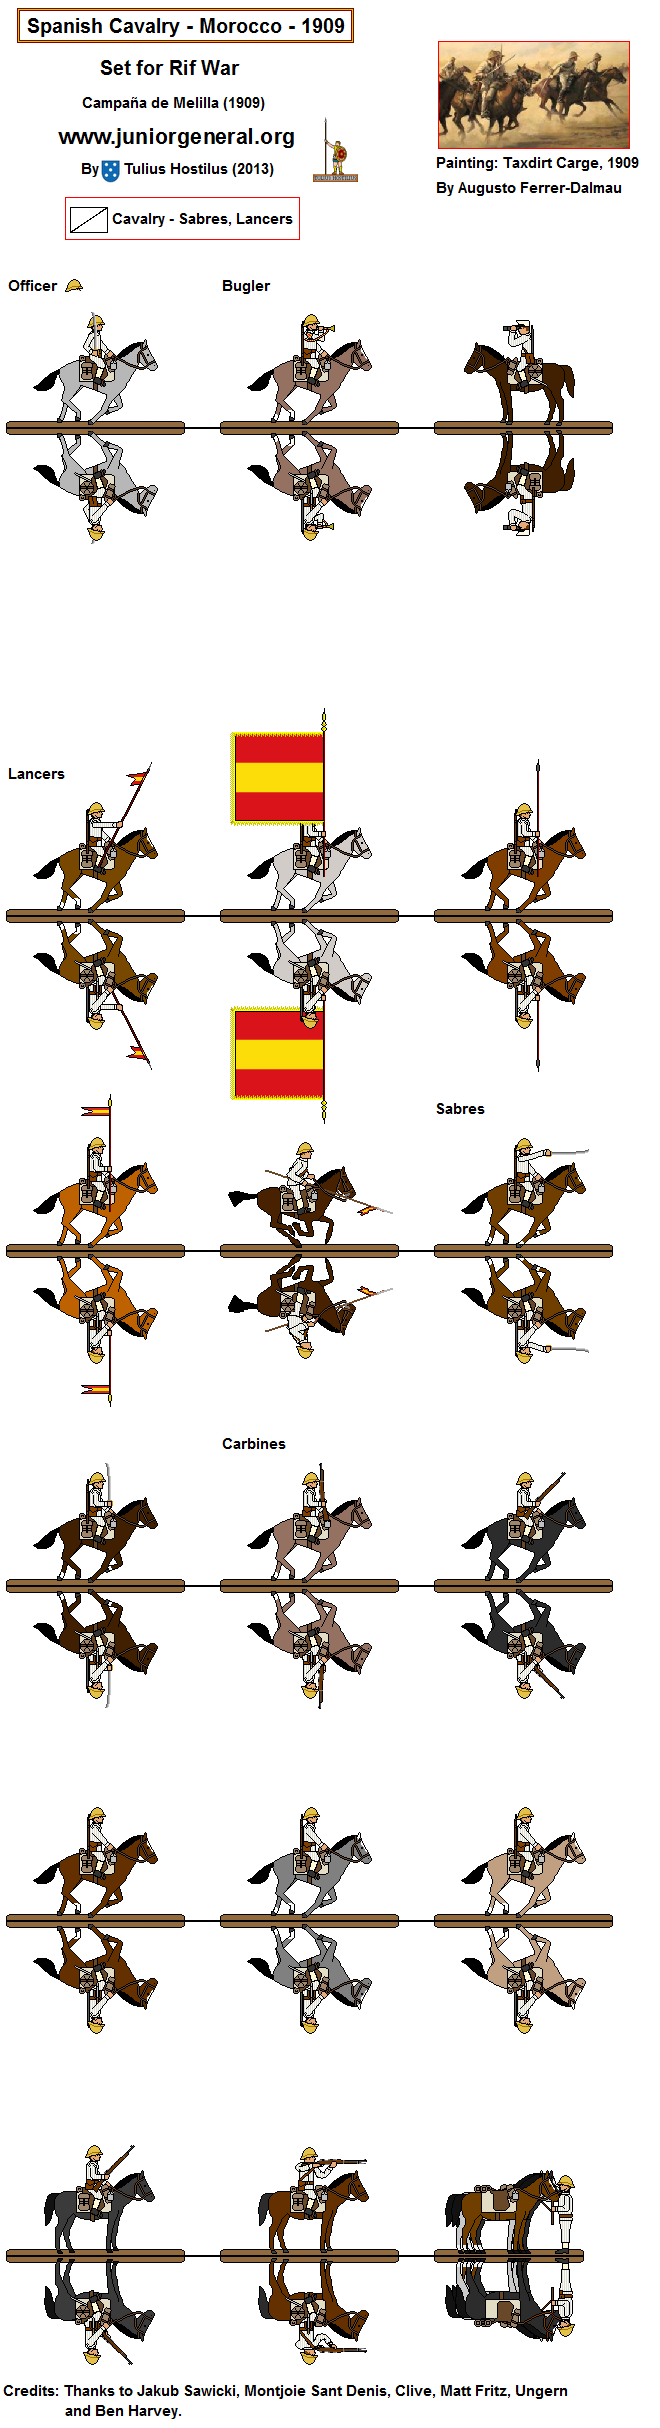 Spanish Cavalry (Rif War)